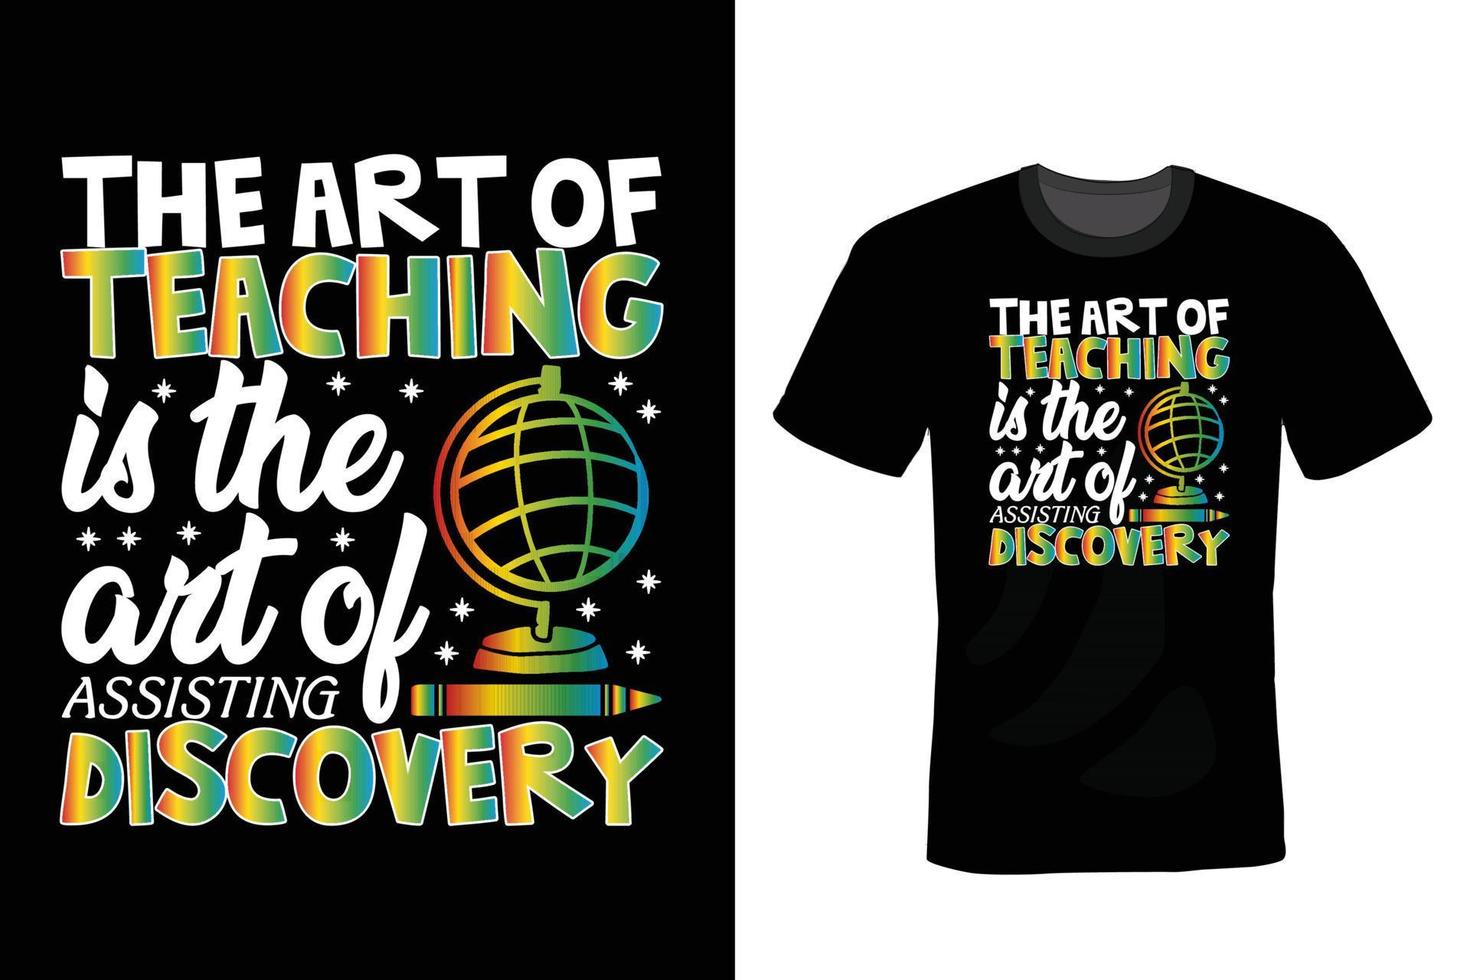 Teacher T shirt design, vintage, typography vector